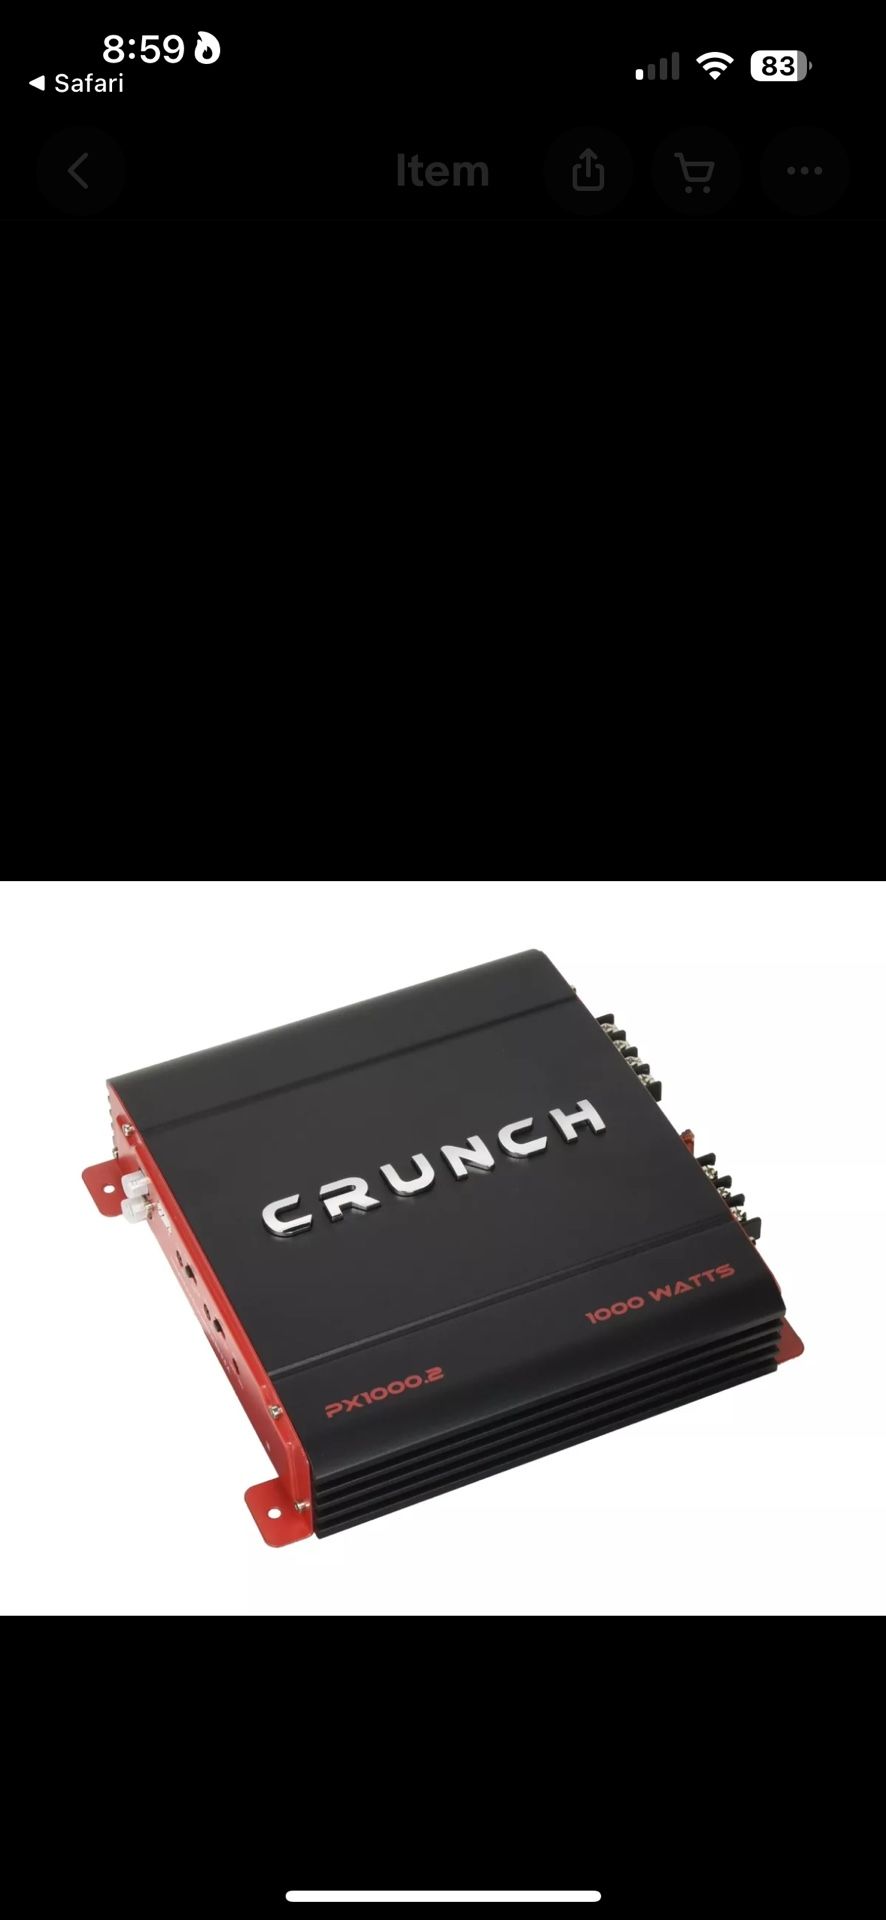 Crunch Amp Px 1000.2 Car Audio